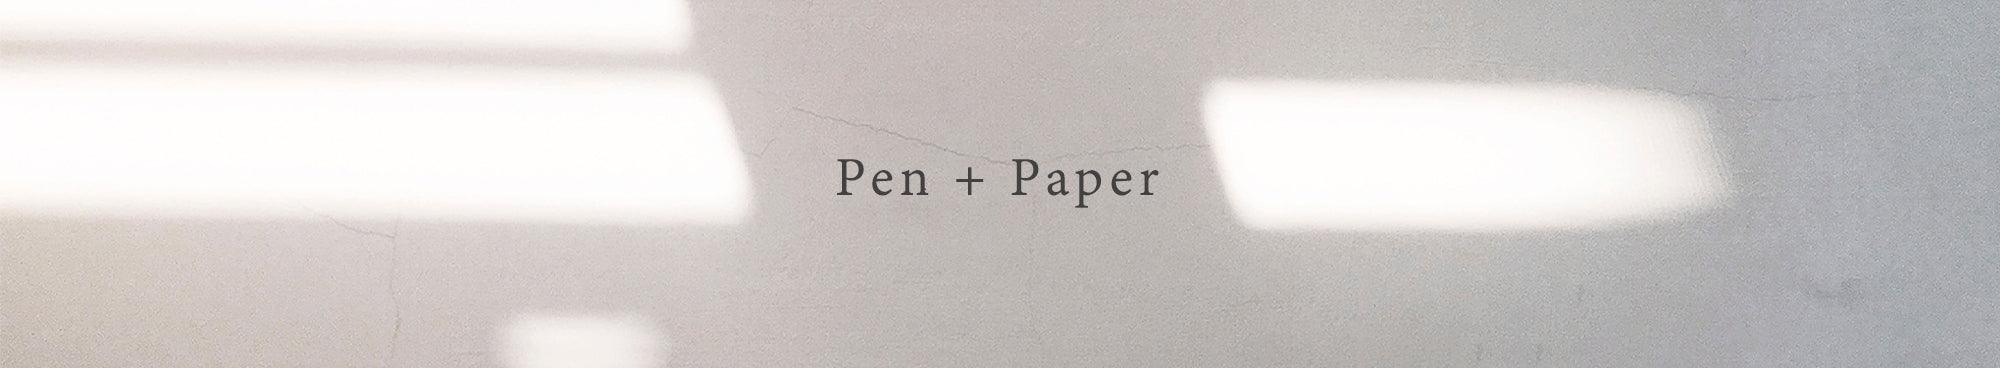 Pen + Paper - Rikumo